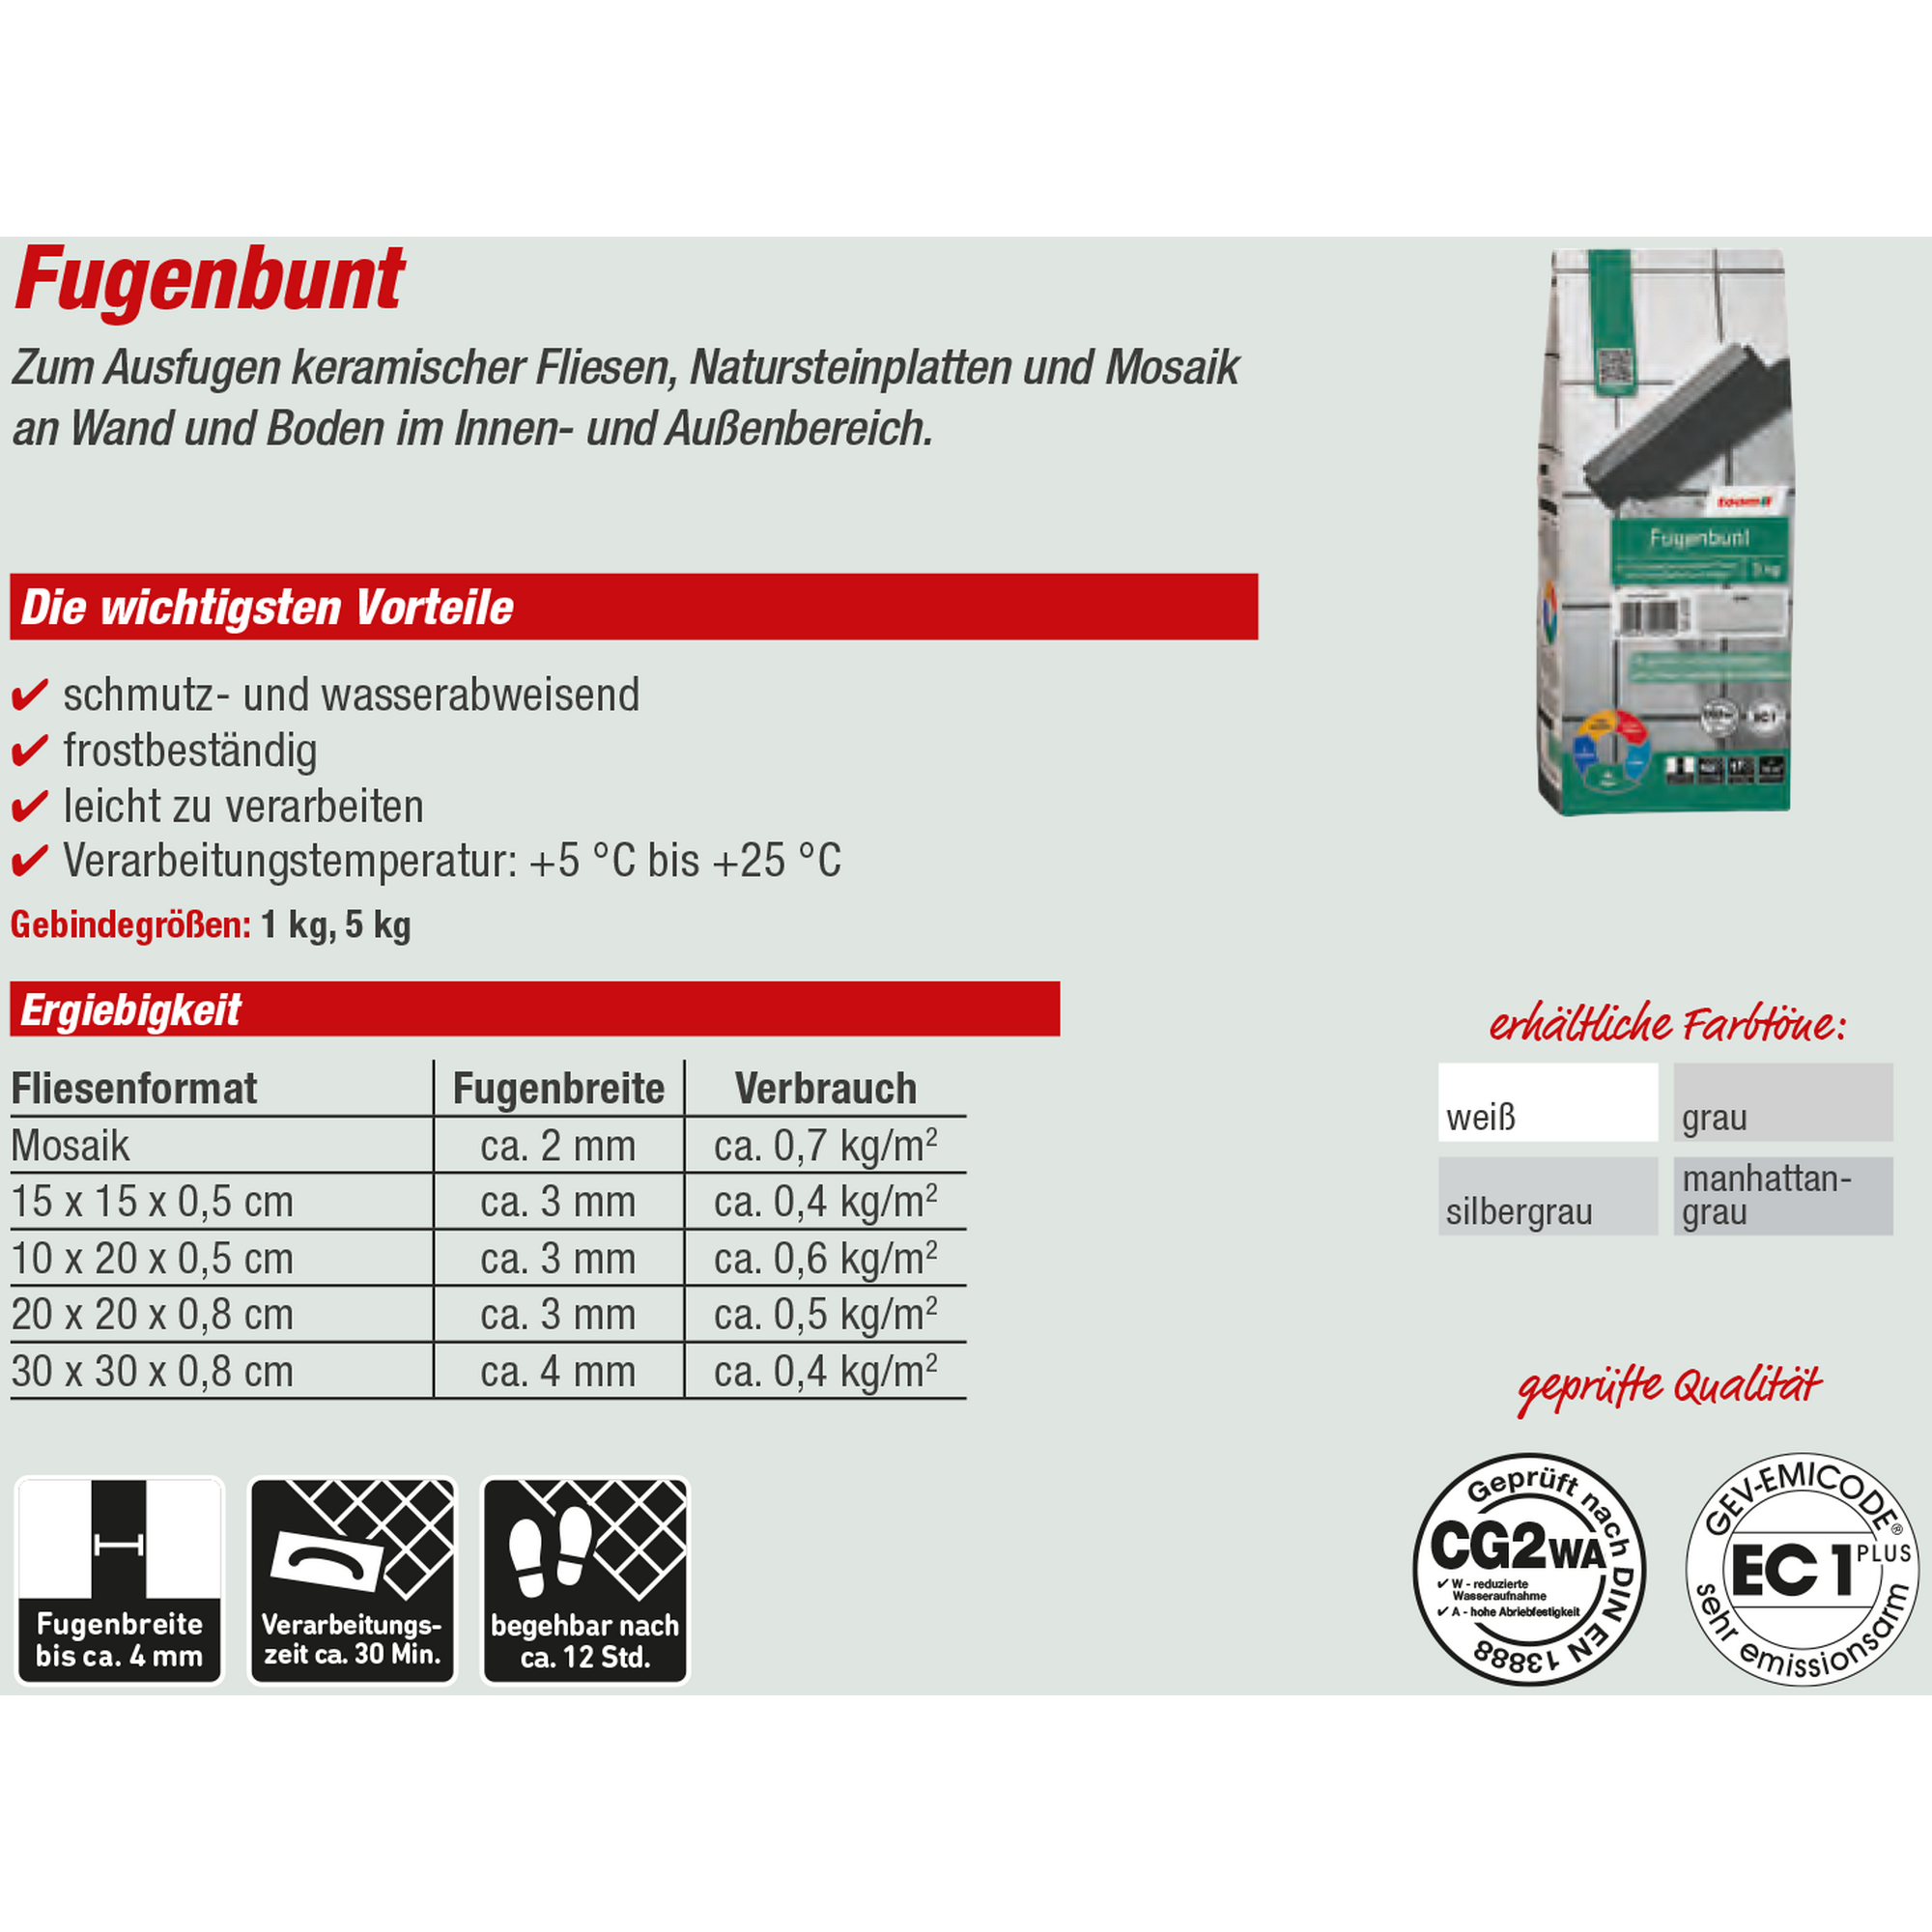 Fugenbunt grau 5 kg toom + product picture